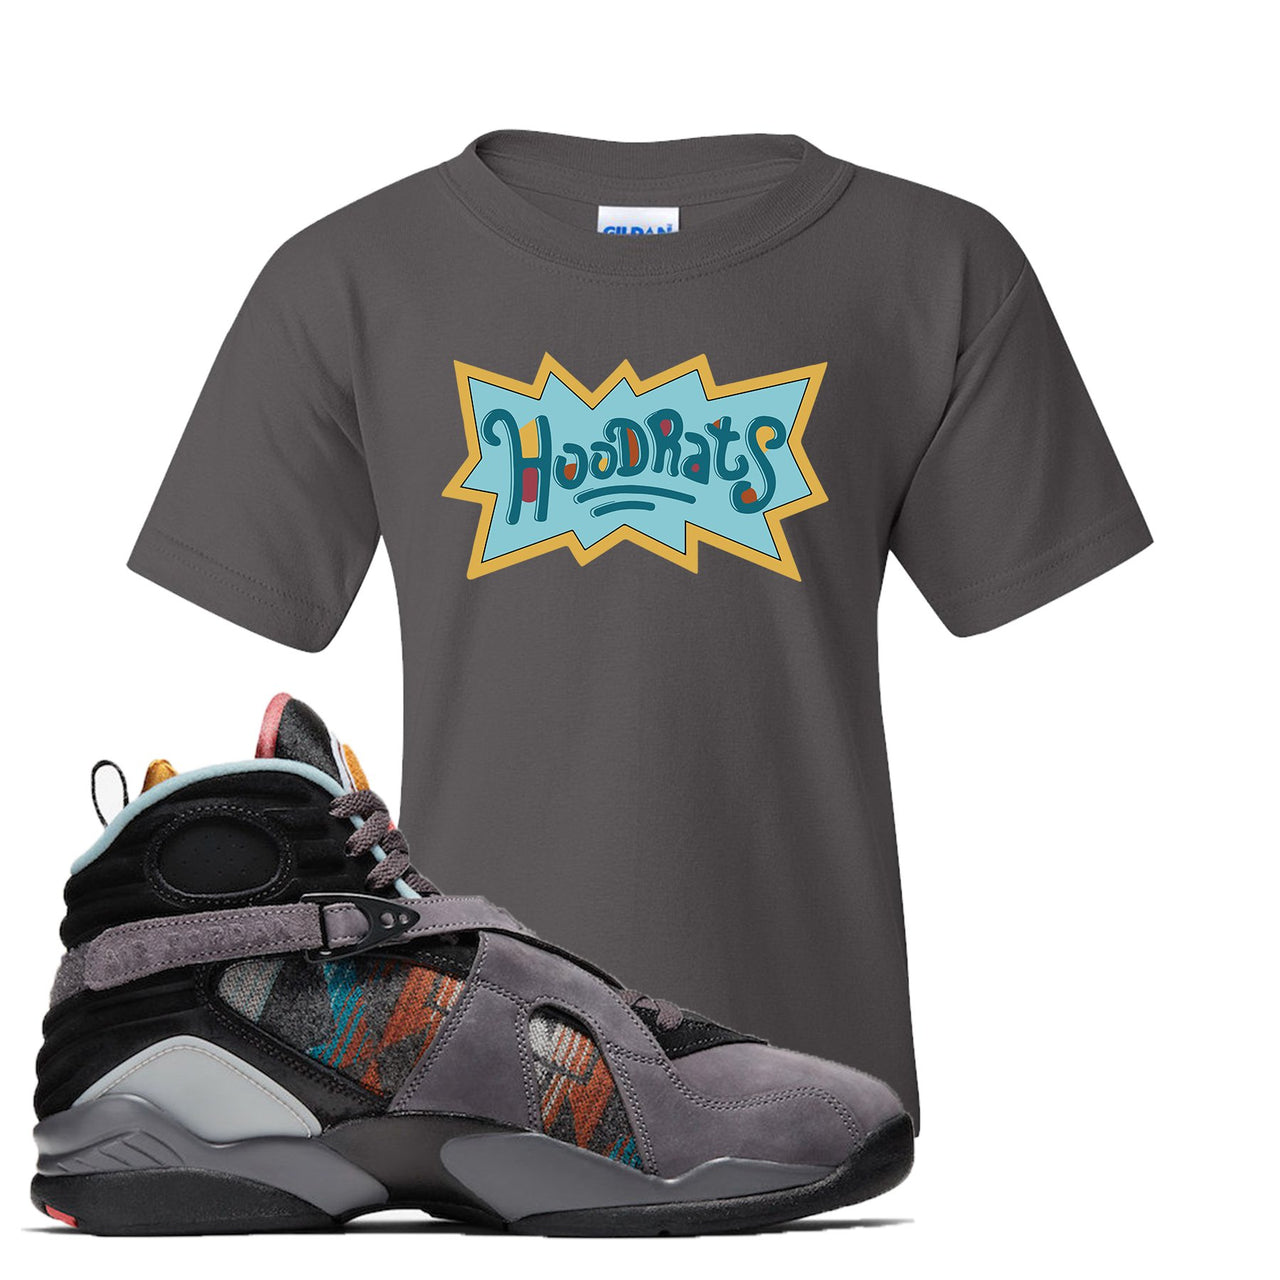 Jordan 8 N7 Pendleton Hood Rats Charcoal Gray Sneaker Hook Up Kid's T-Shirt